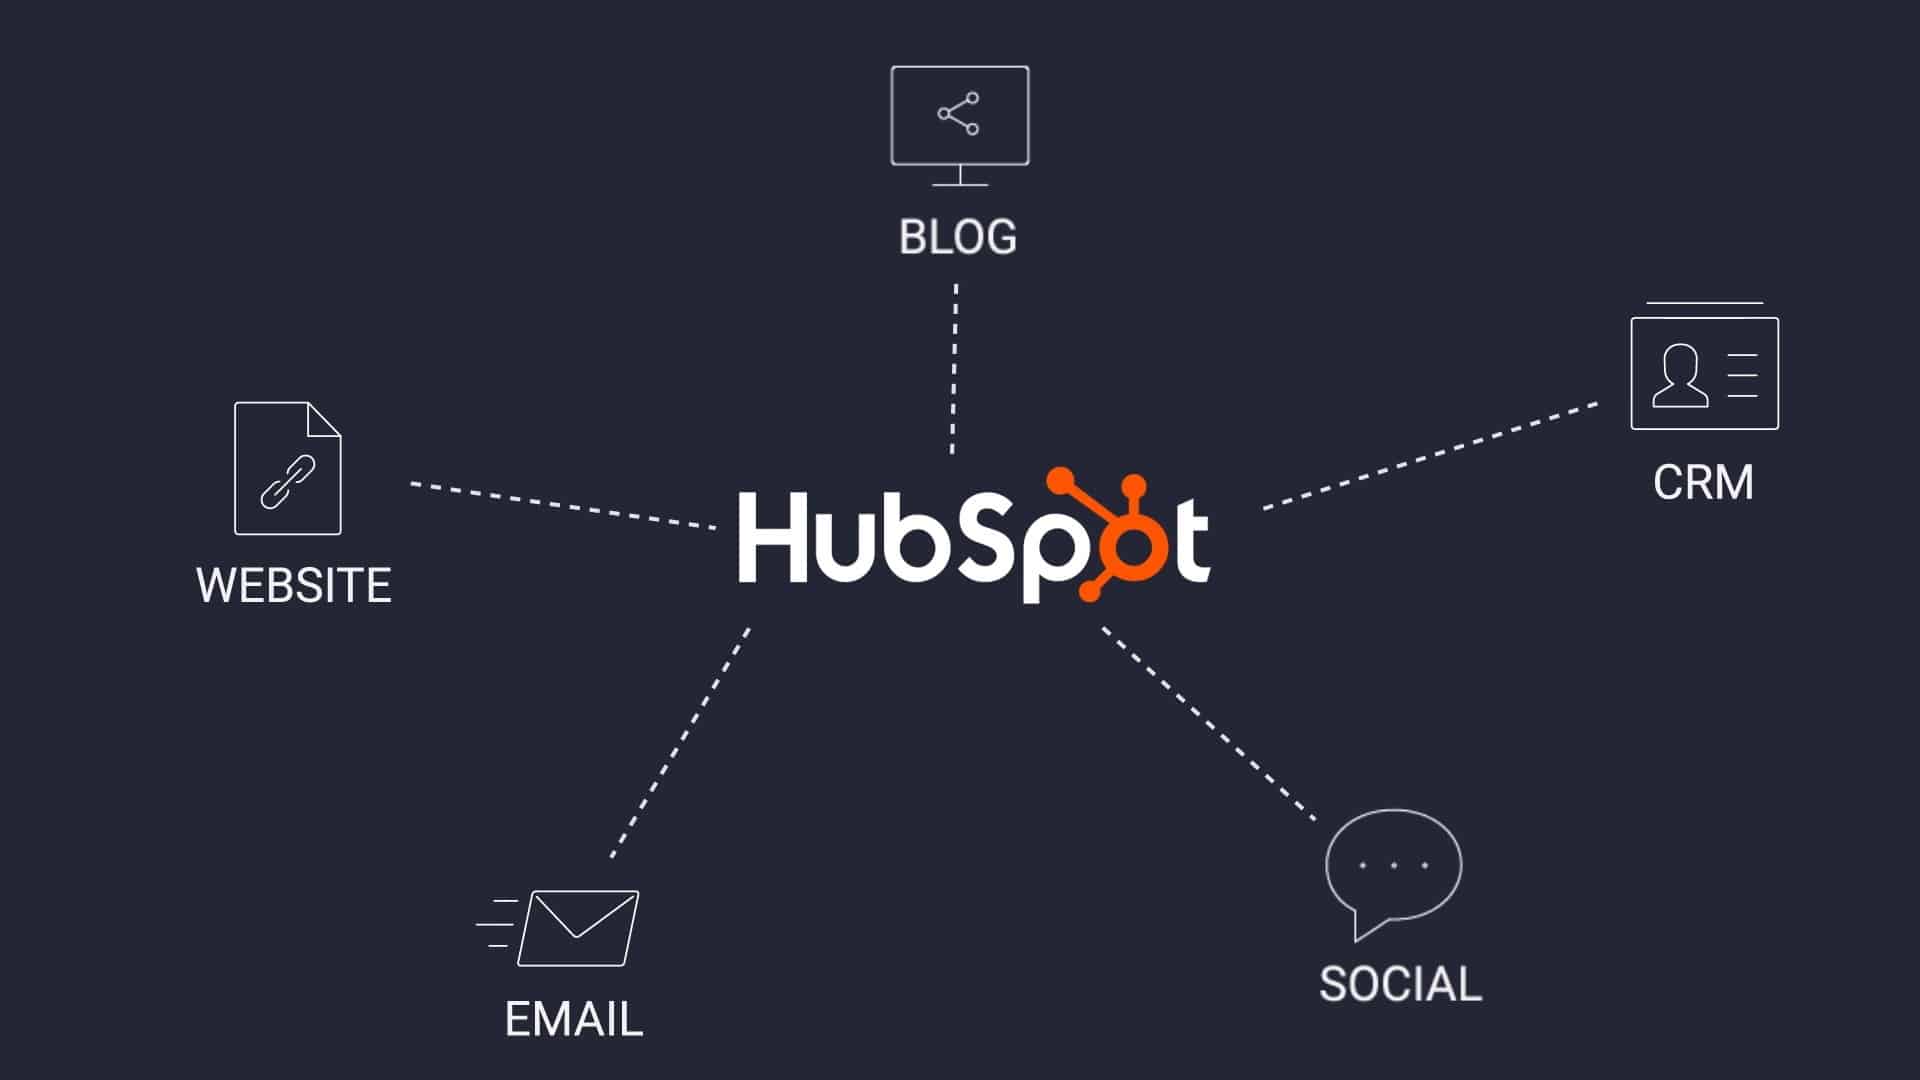 The HubSpot Marketing Blog